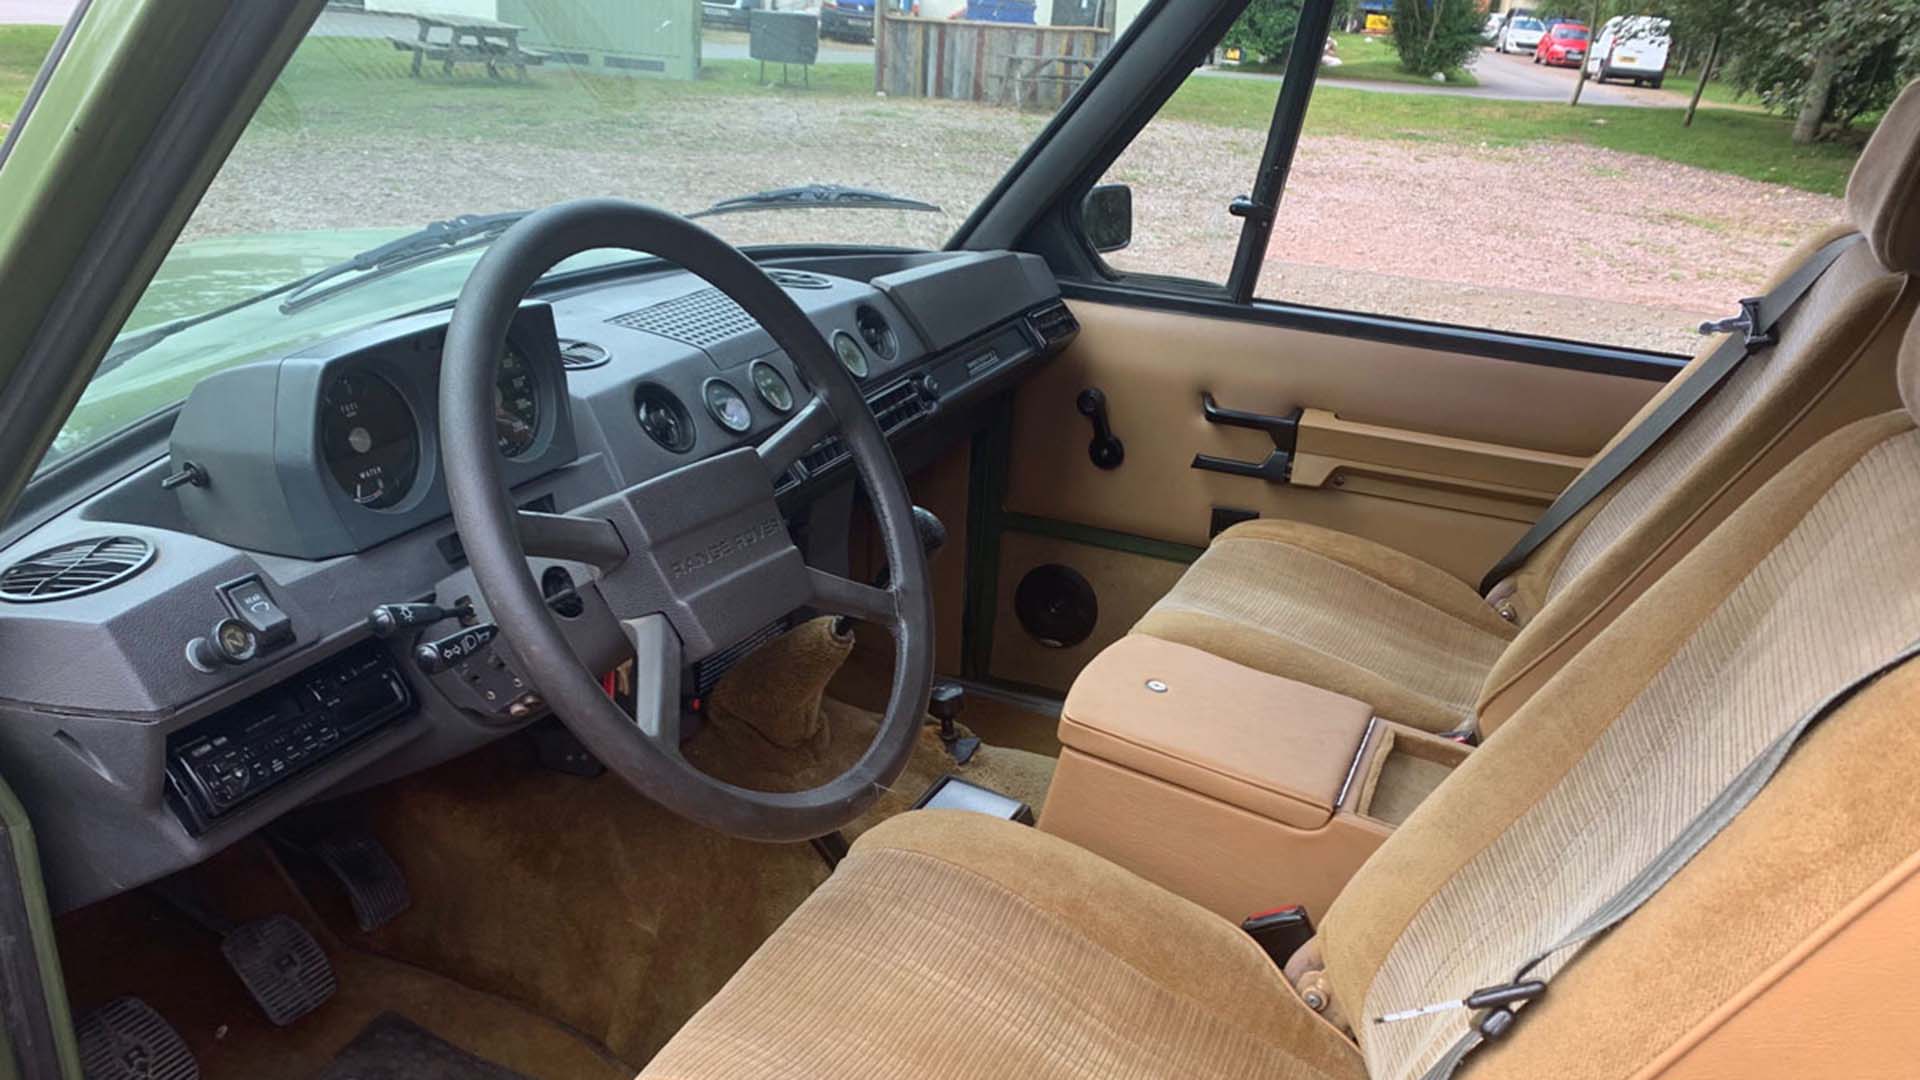 Salvage Hunters Classic Cars Range Rover interior